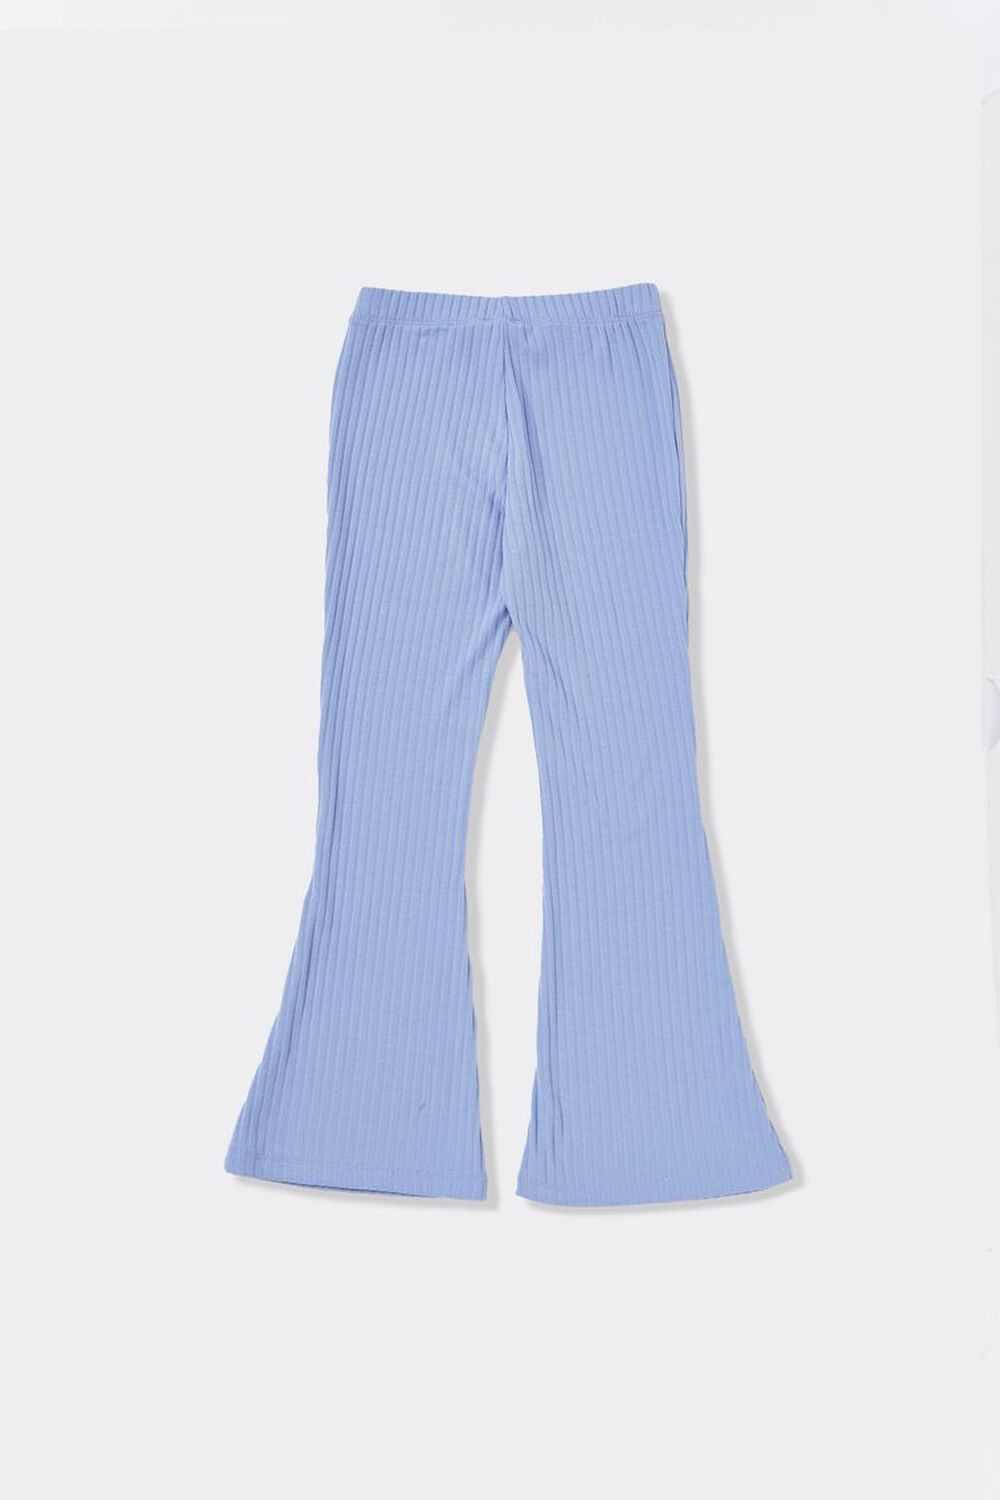 BLUE Girls Ribbed Flare Pants (Kids), image 2